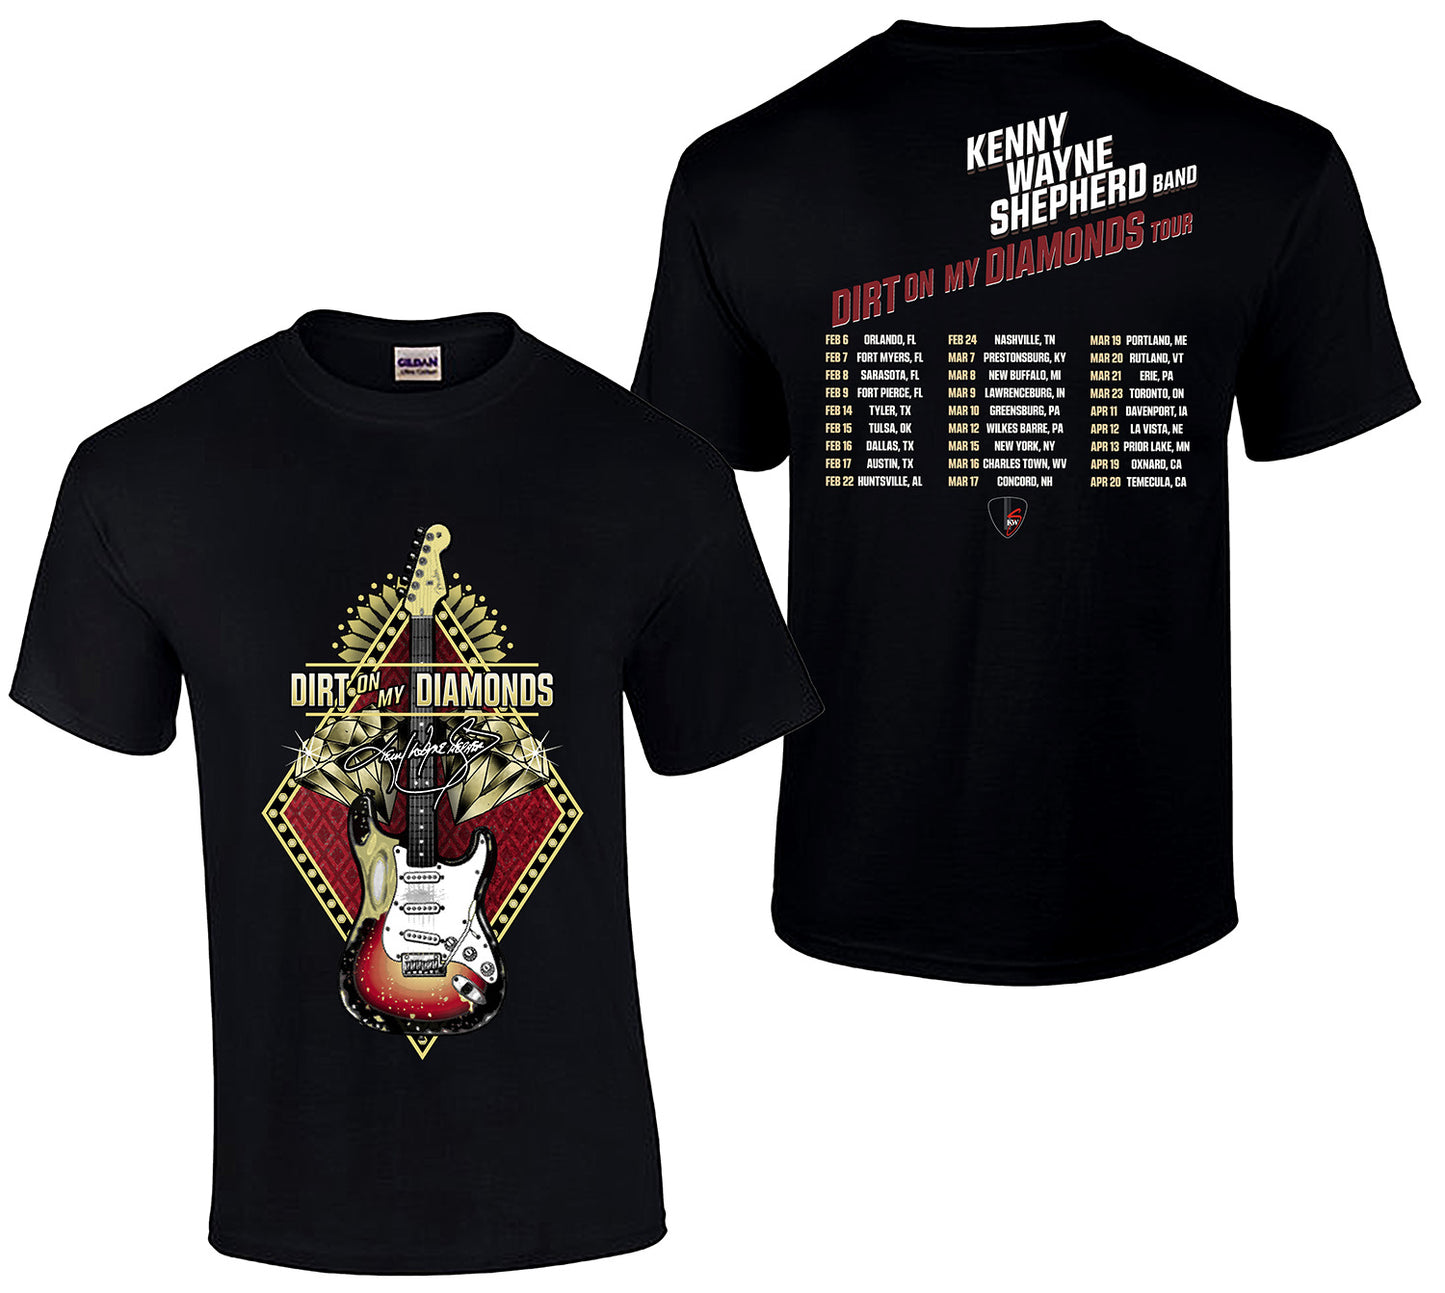 KWS Band Dirt On My Diamonds Men's Tour Dates Shirt